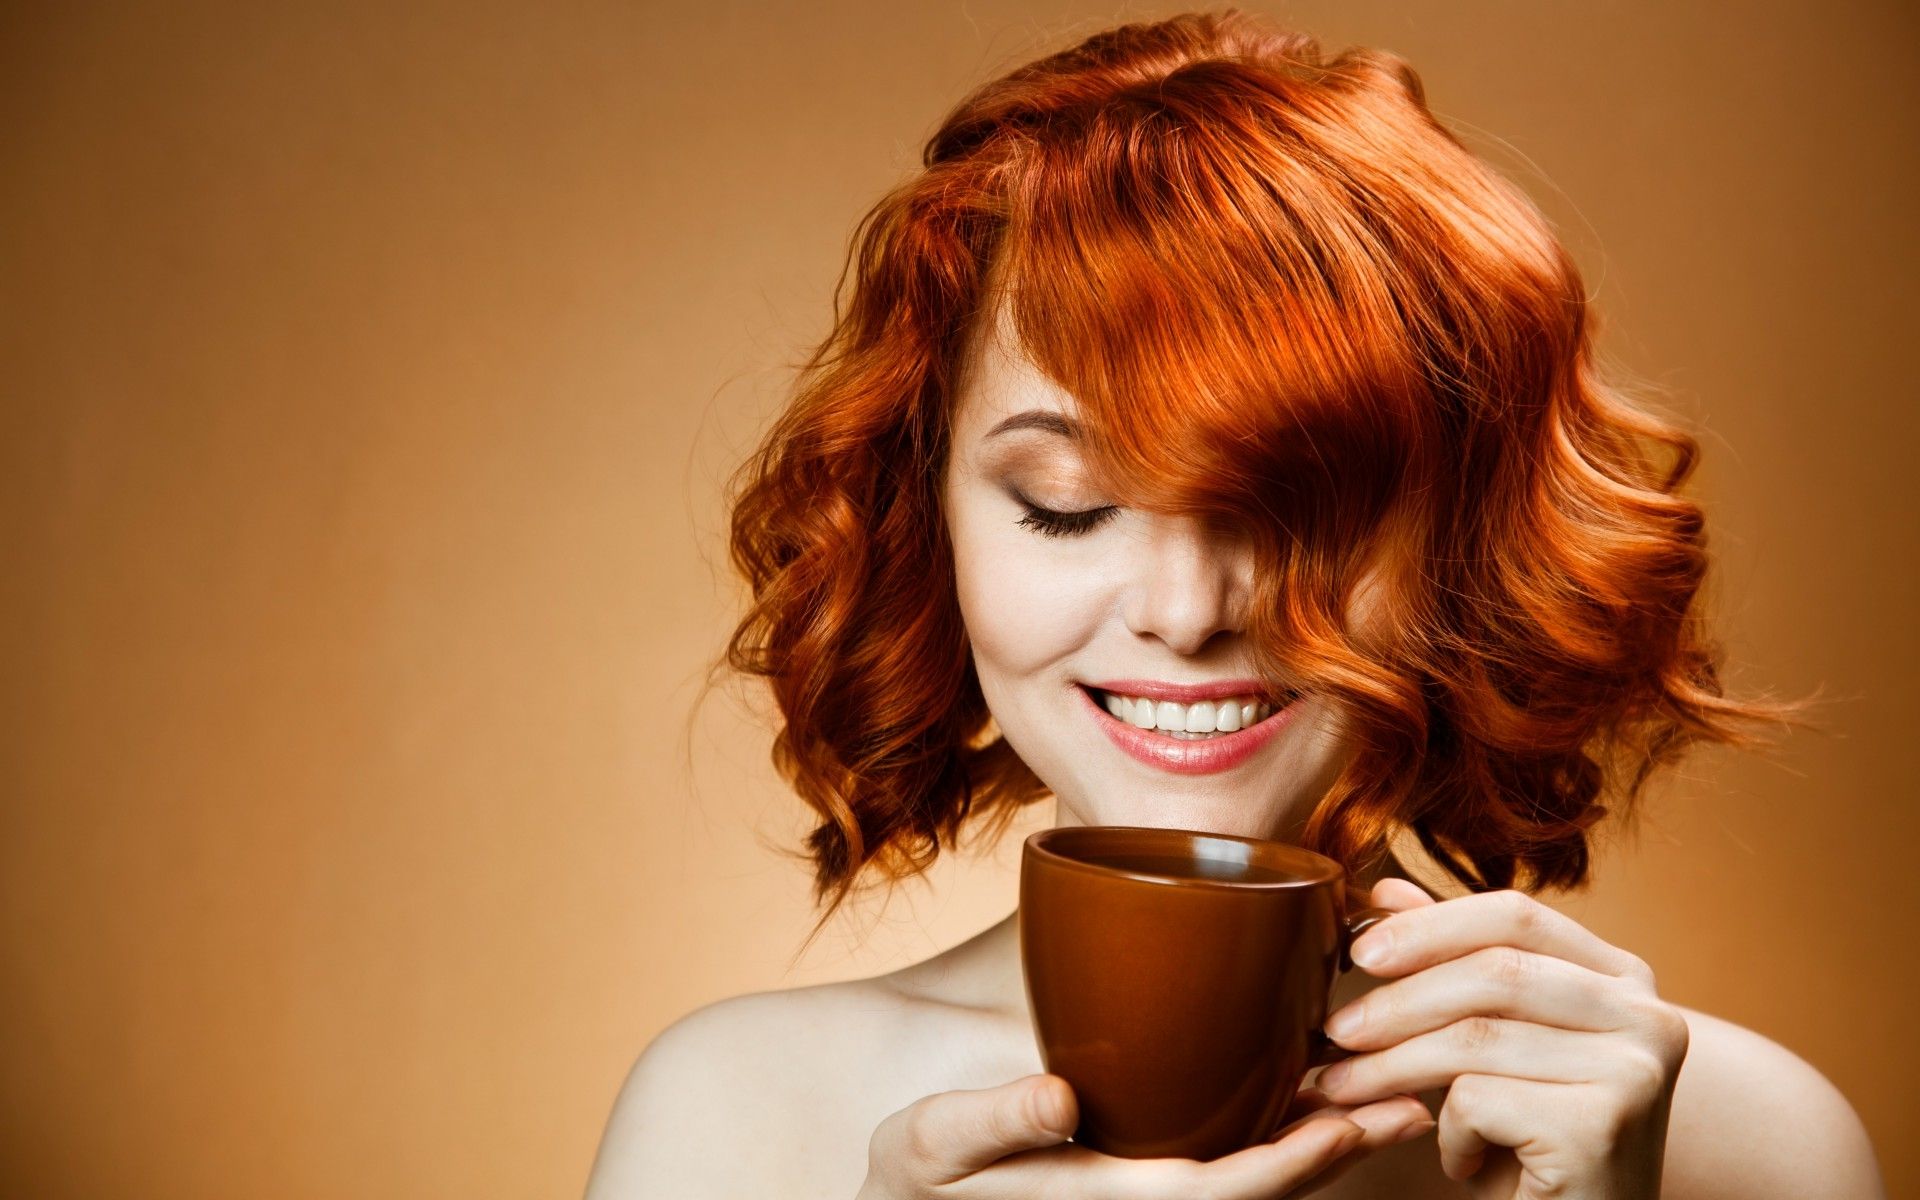 Smile Redhead Girl Drink Coffee Wallpaper HD / Desktop and Mobile